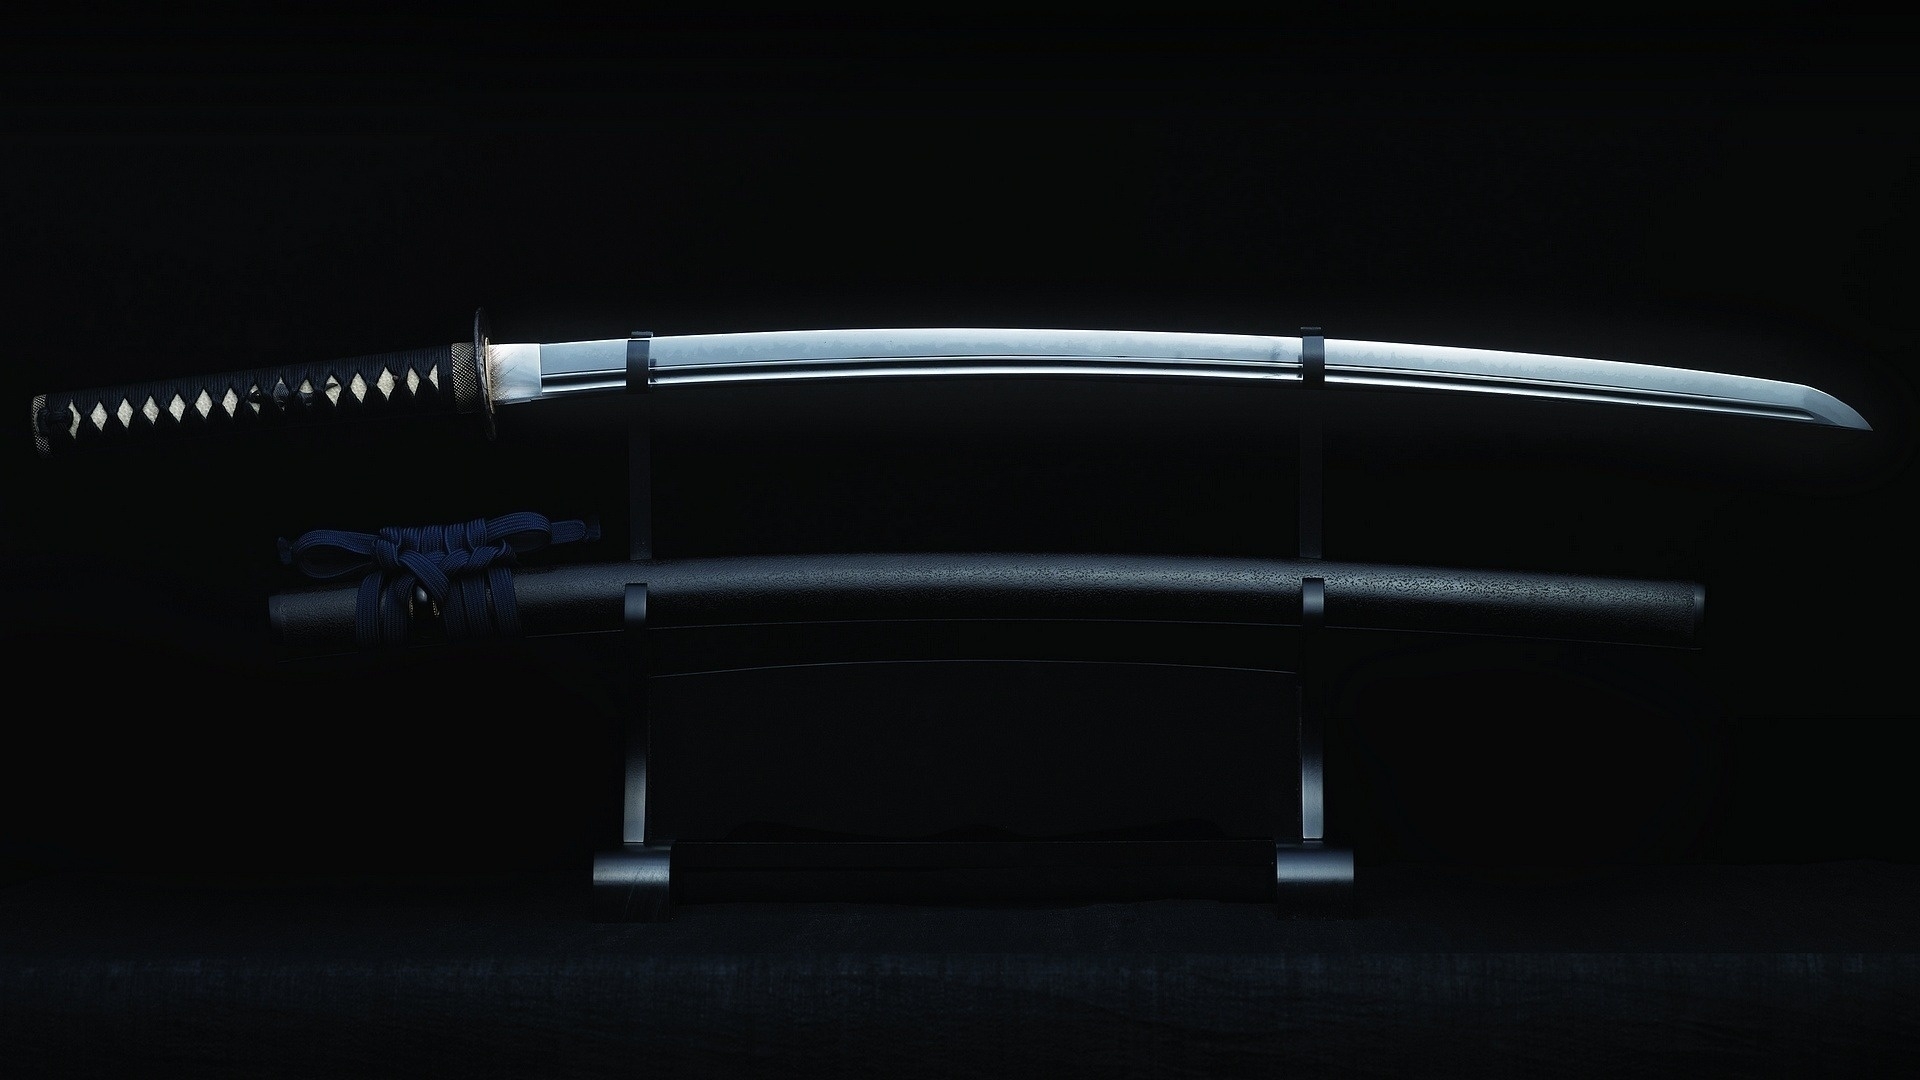 swords, objects, black